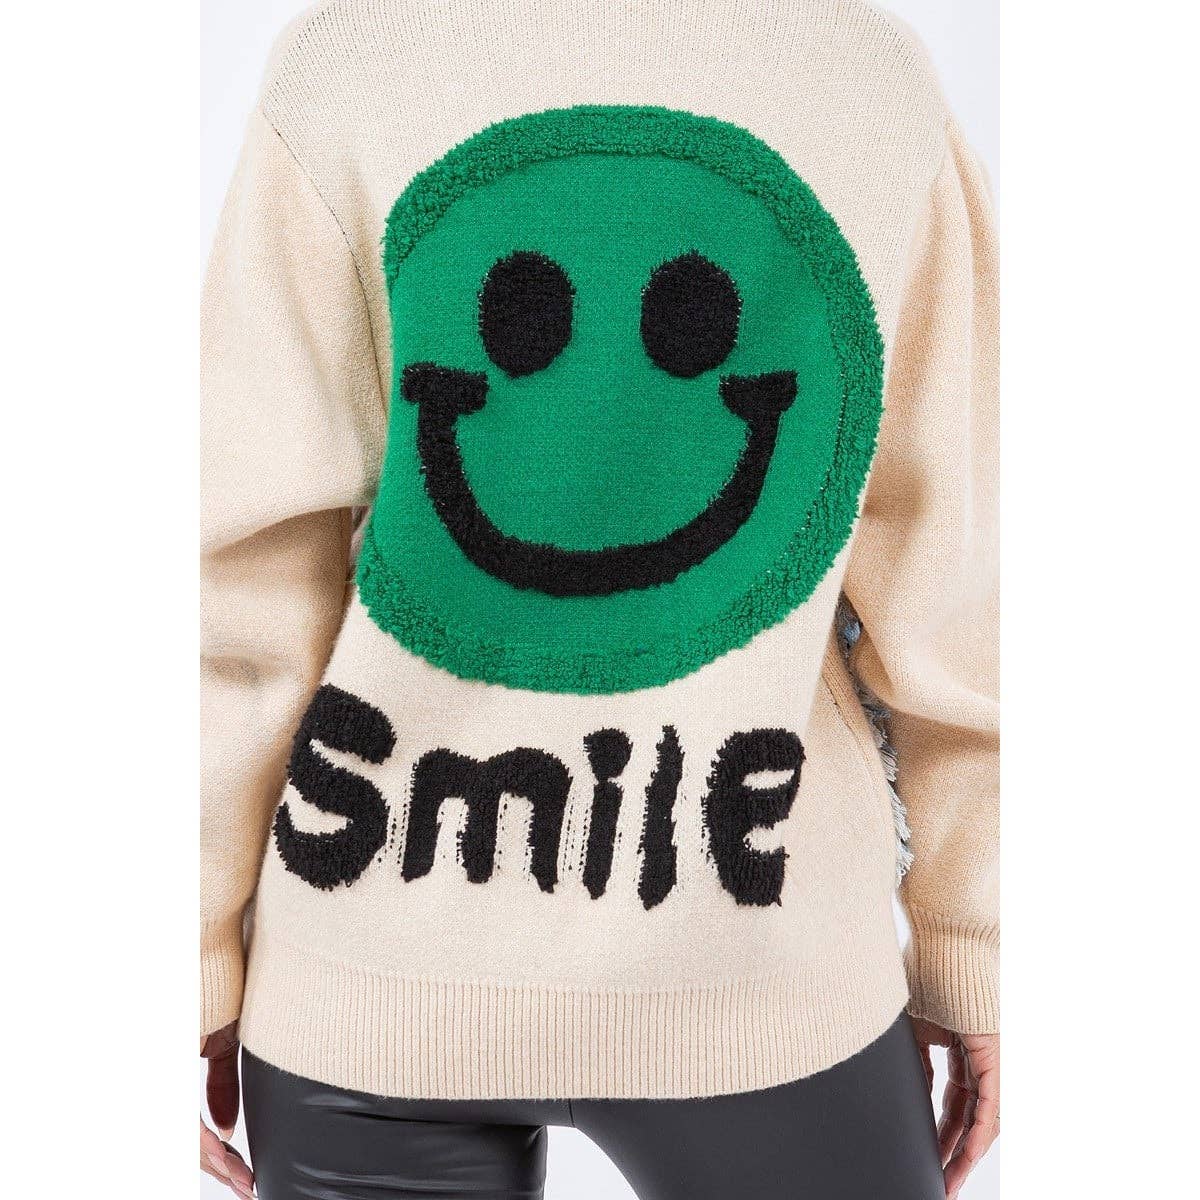 Smile It Up Cute Sweater Denim Blazer